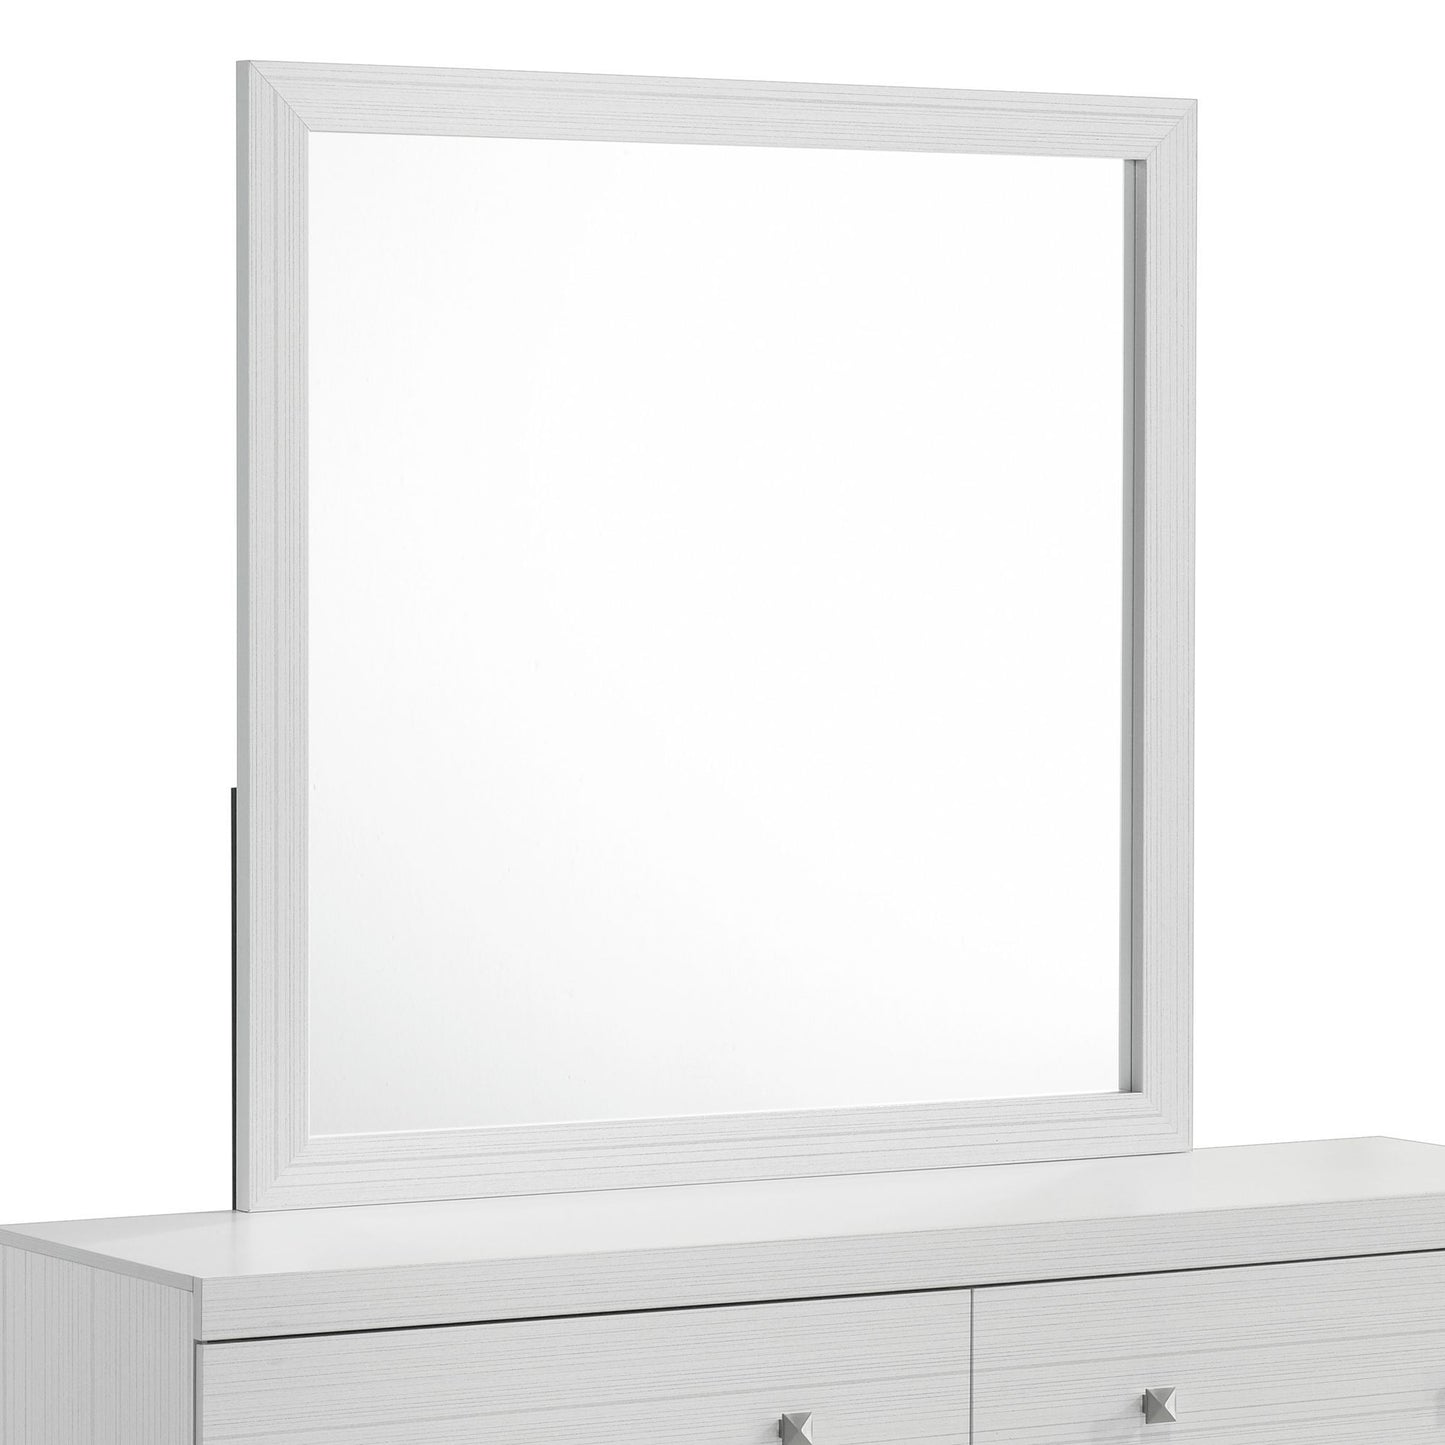 Belinda - Dresser and Mirror - White